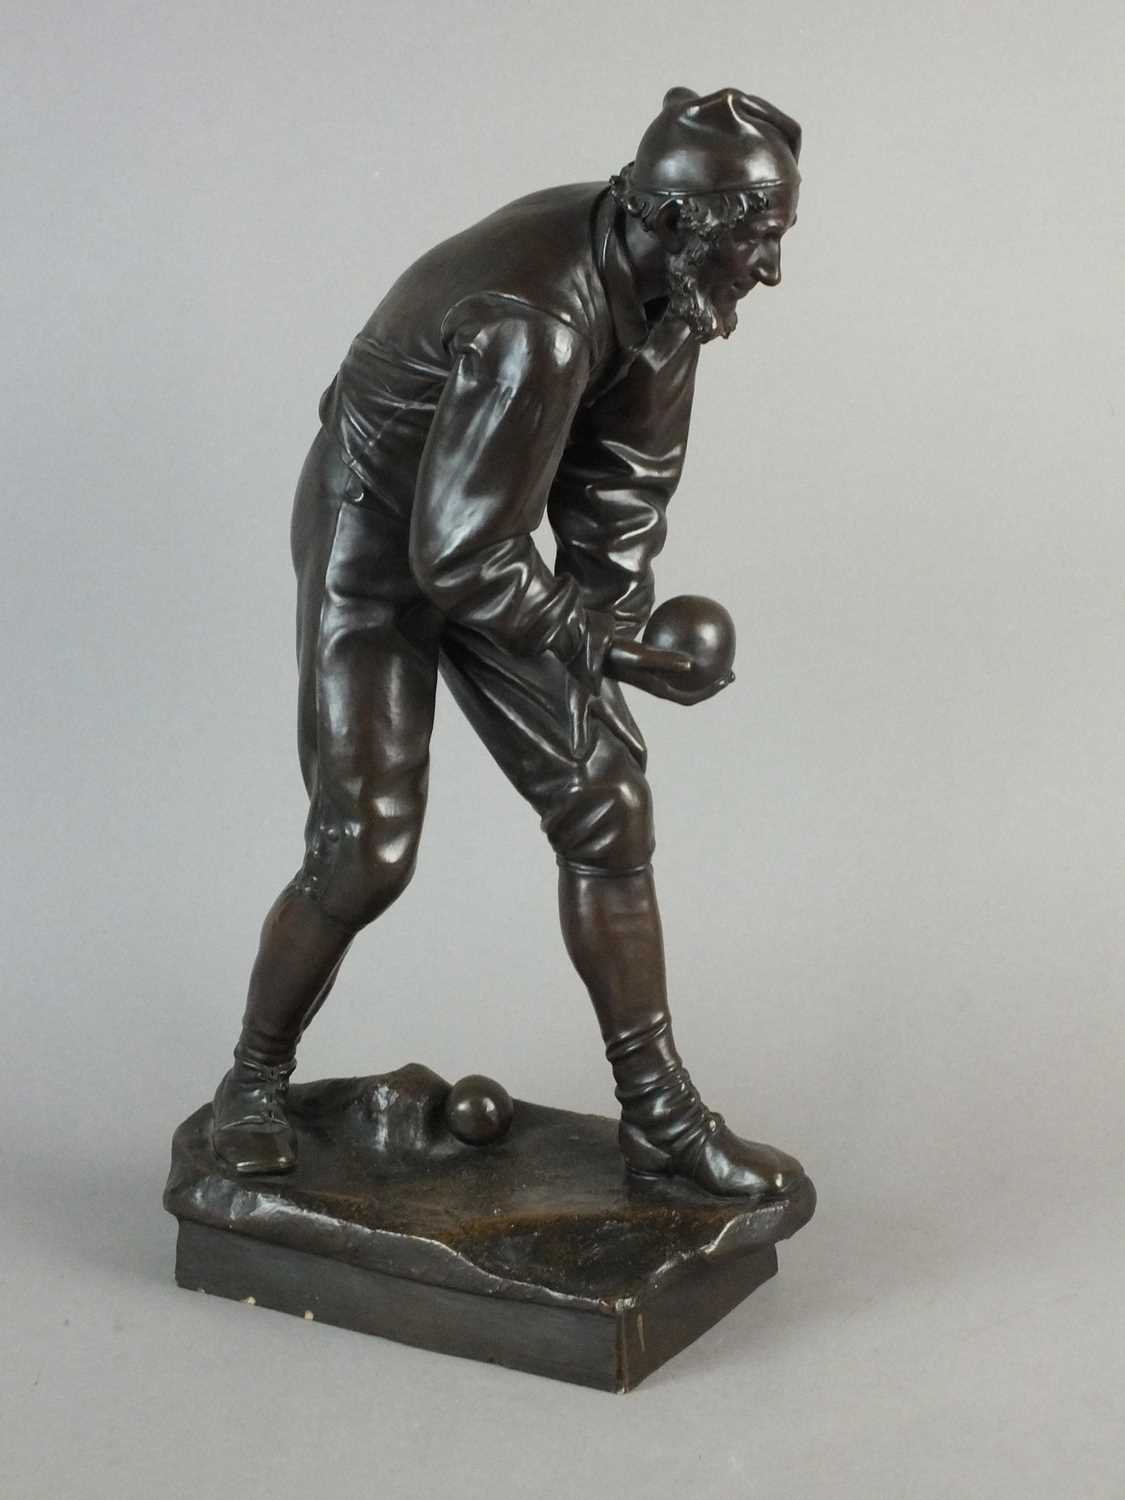 Late 19th century Austrian terracotta figure of a bowler